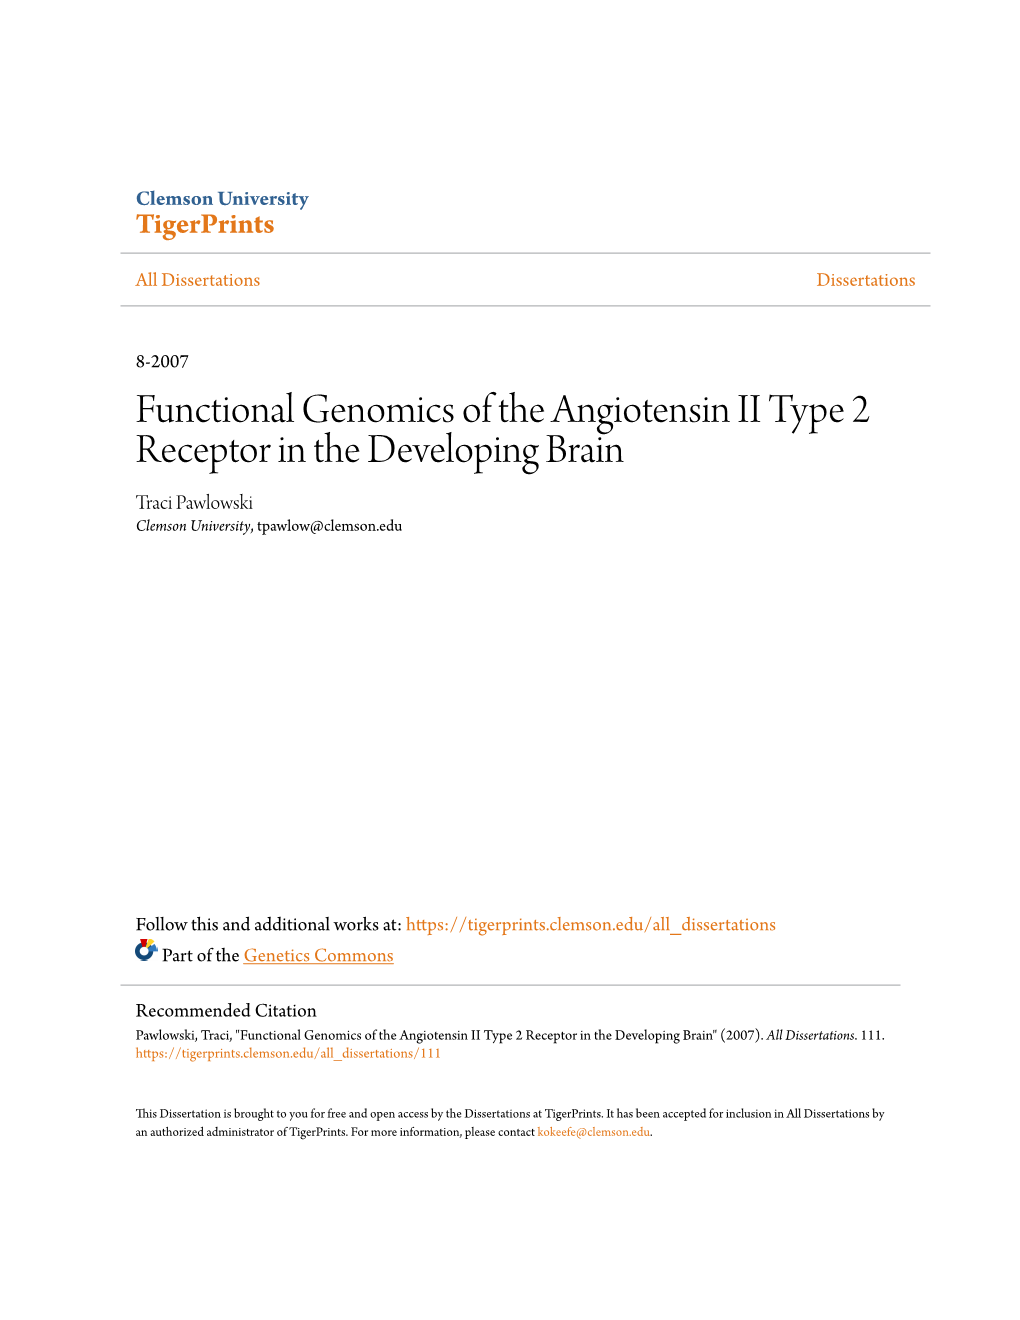 Functional Genomics of the Angiotensin II Type 2 Receptor in the Developing Brain Traci Pawlowski Clemson University, Tpawlow@Clemson.Edu